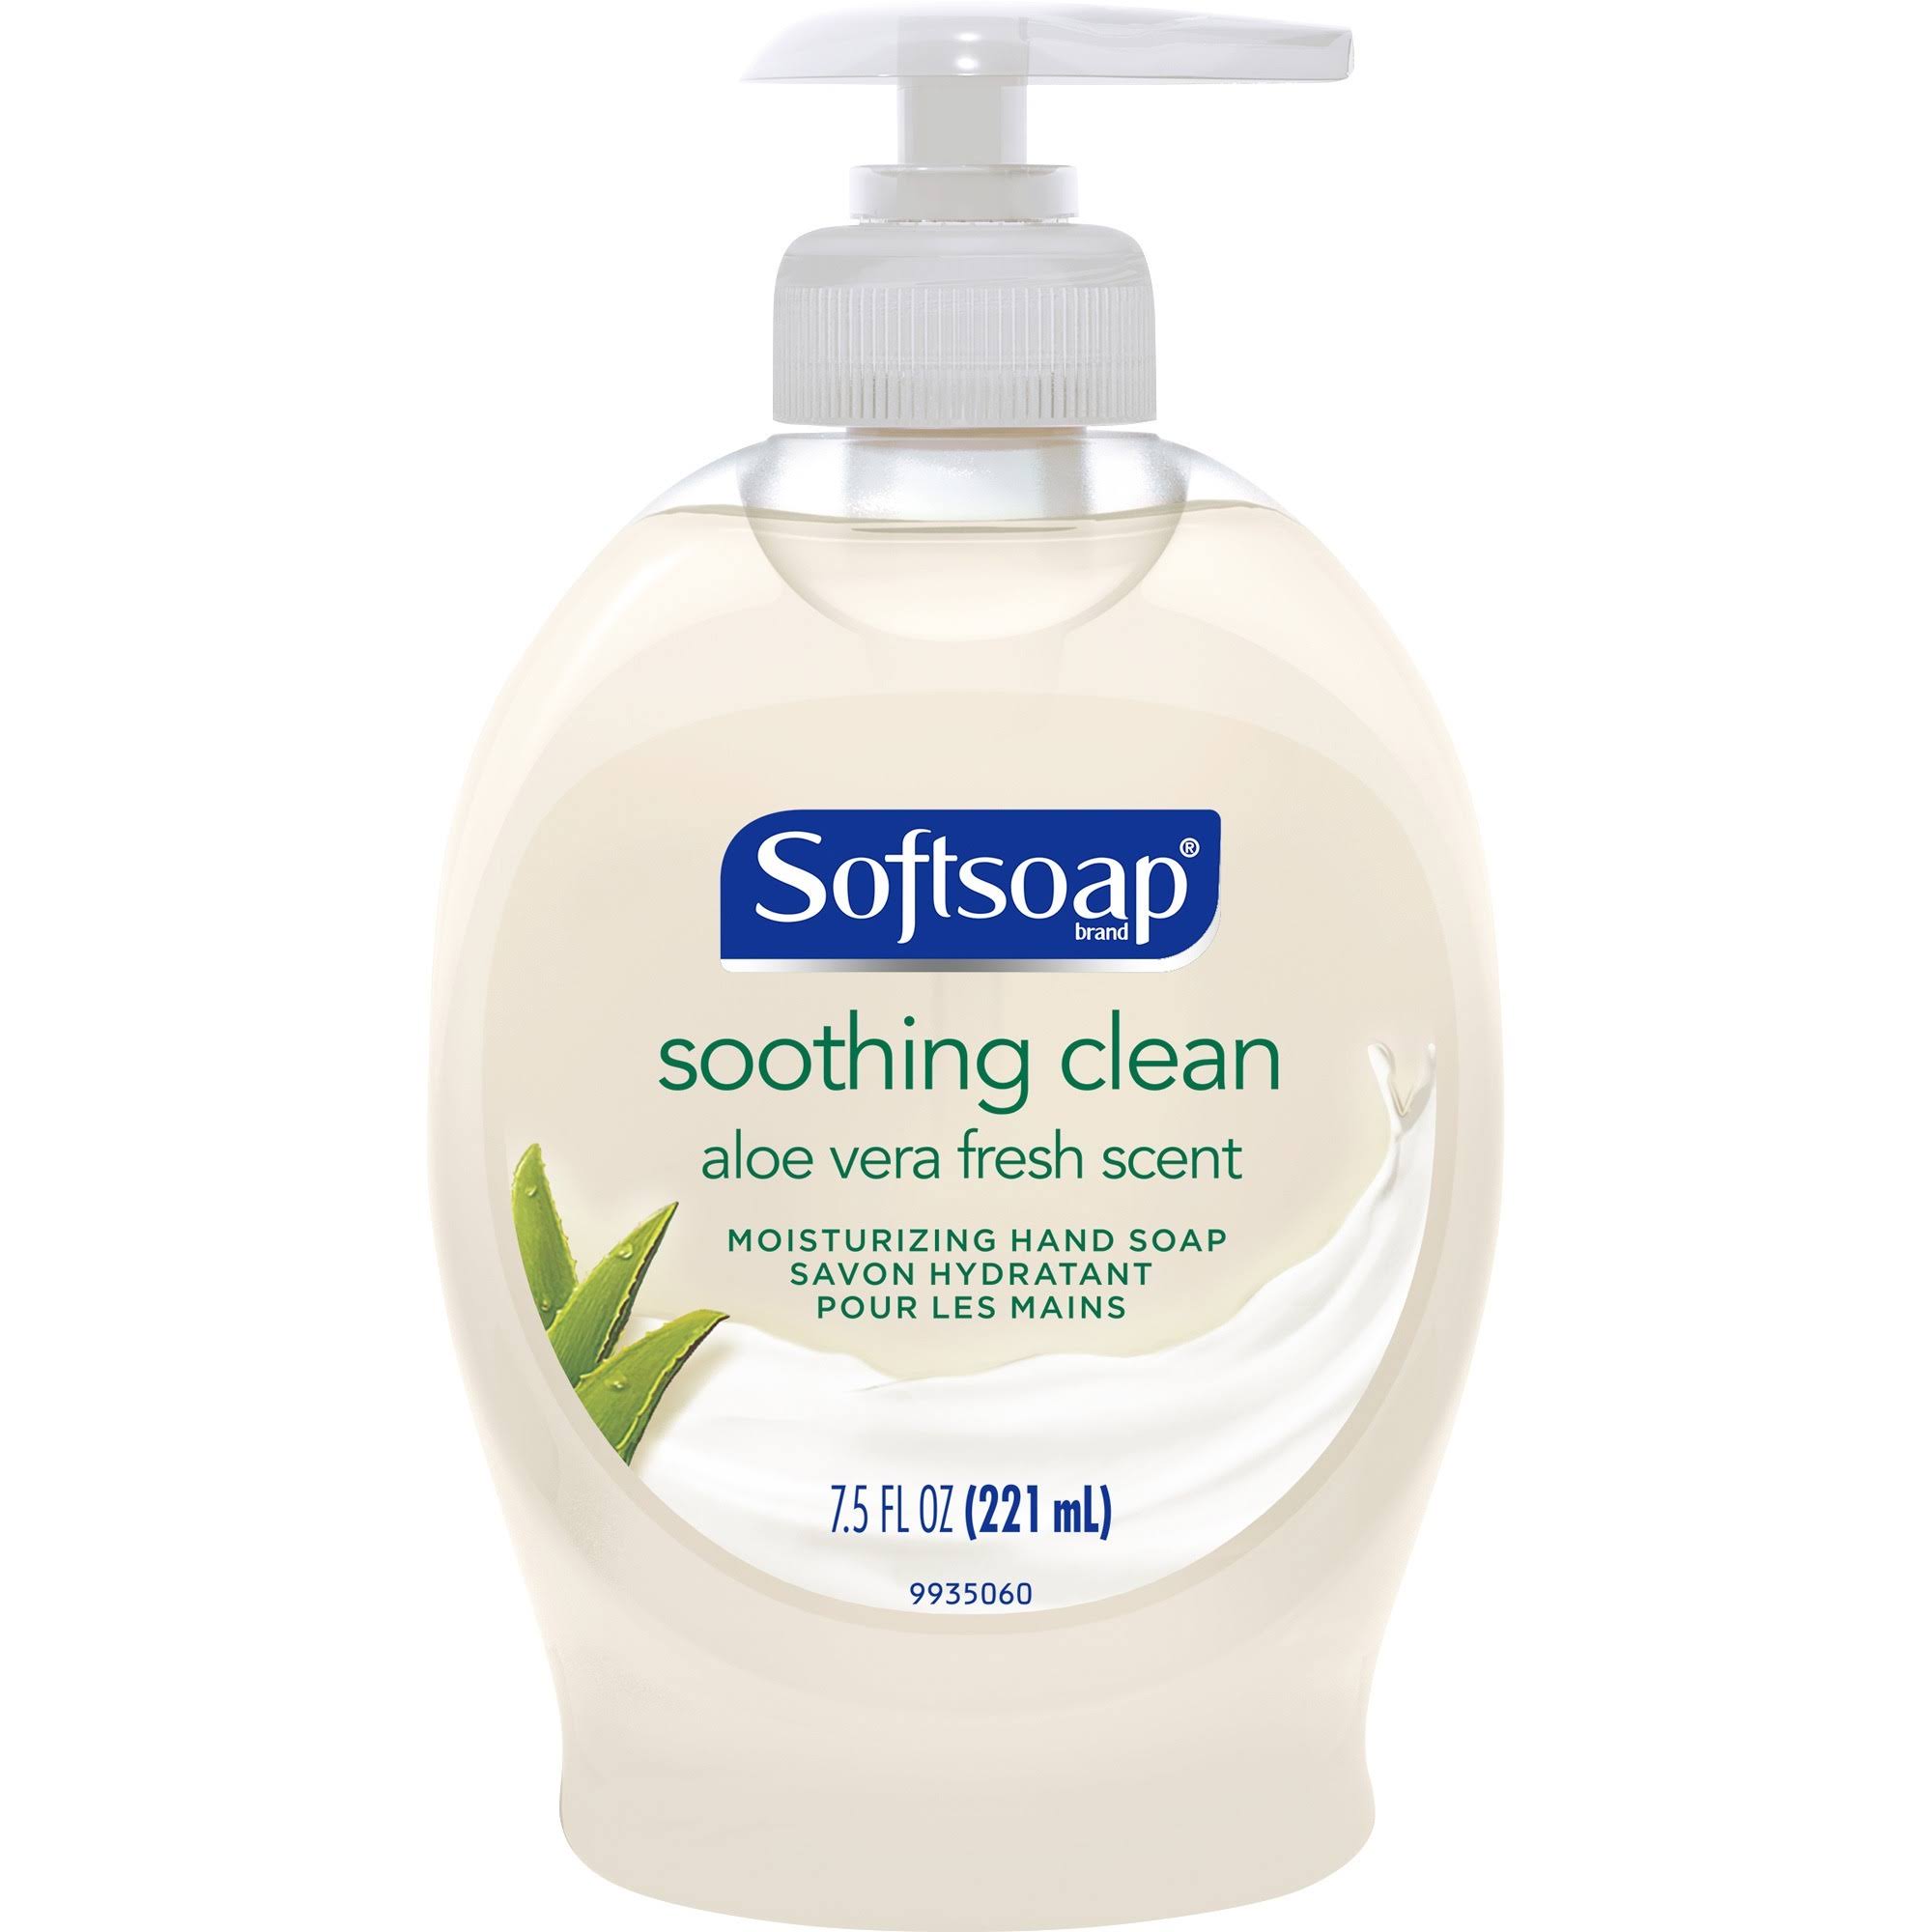 Softsoap Moisturizing Hand Soap - Soothing Aloe Vera, 7.5oz